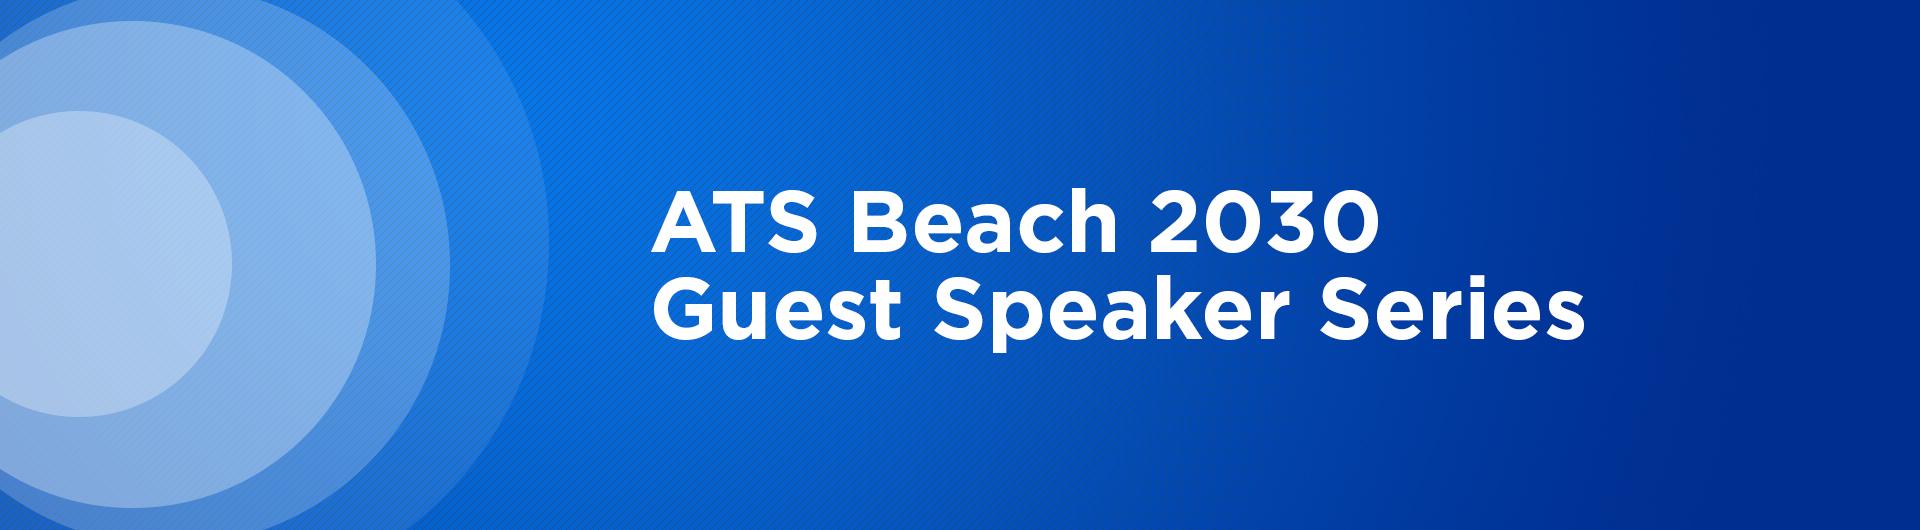 A T S Beach 2030 Guest Speaker Series